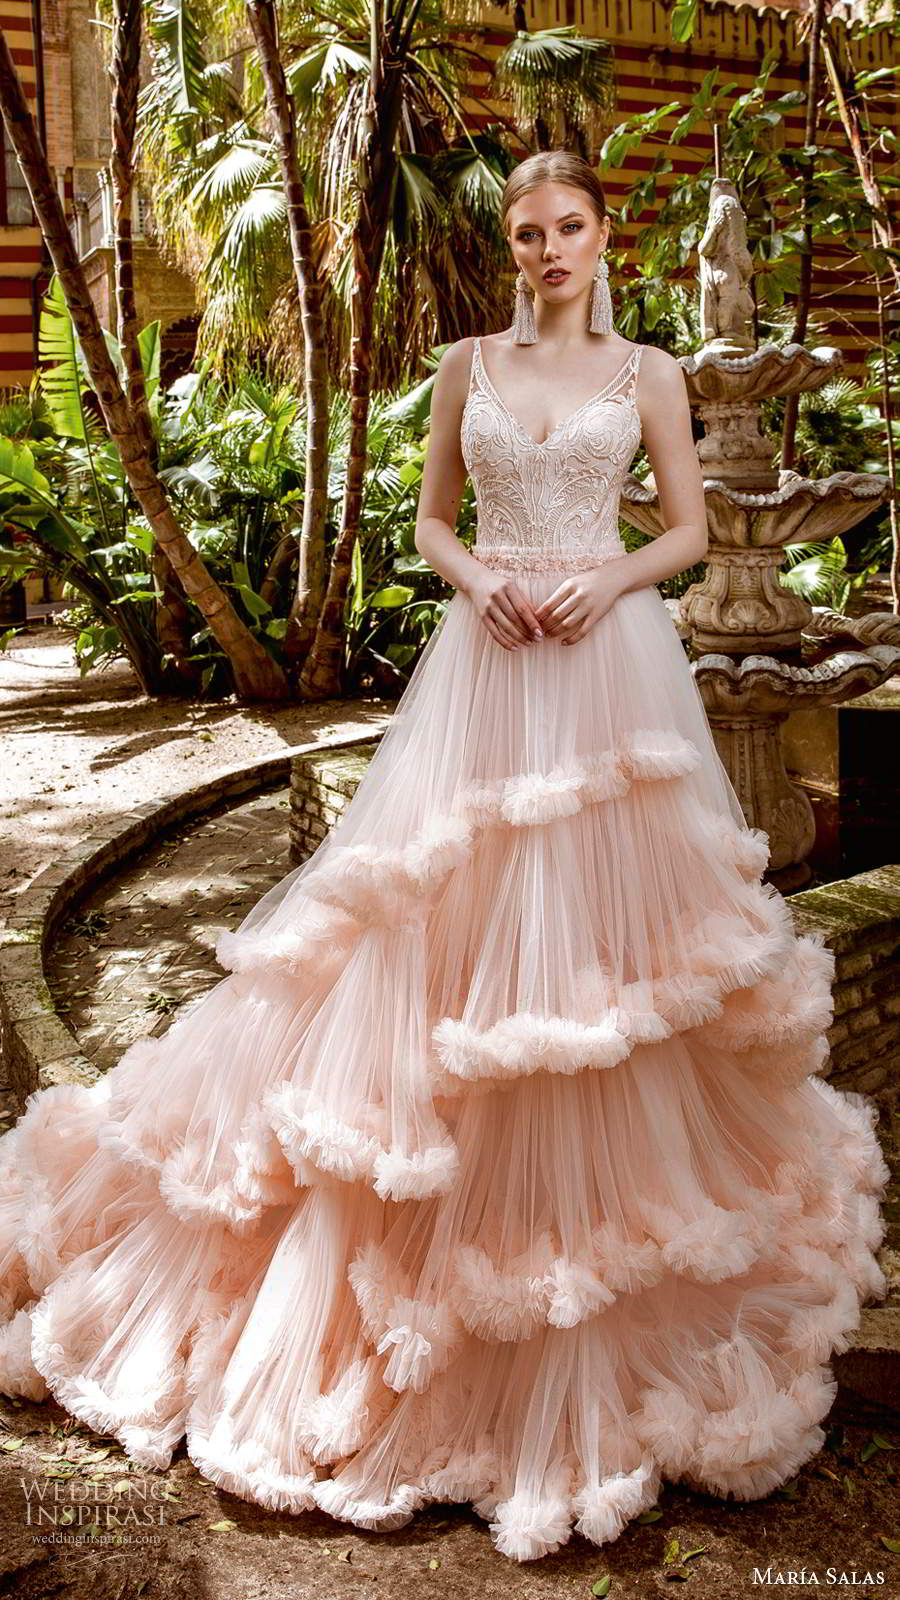 maria salas 2019 bridal sleeveless straps v neckline embellished bodice a line ball gown pink blush wedding dress ruffle skirt chapel train (4) mv